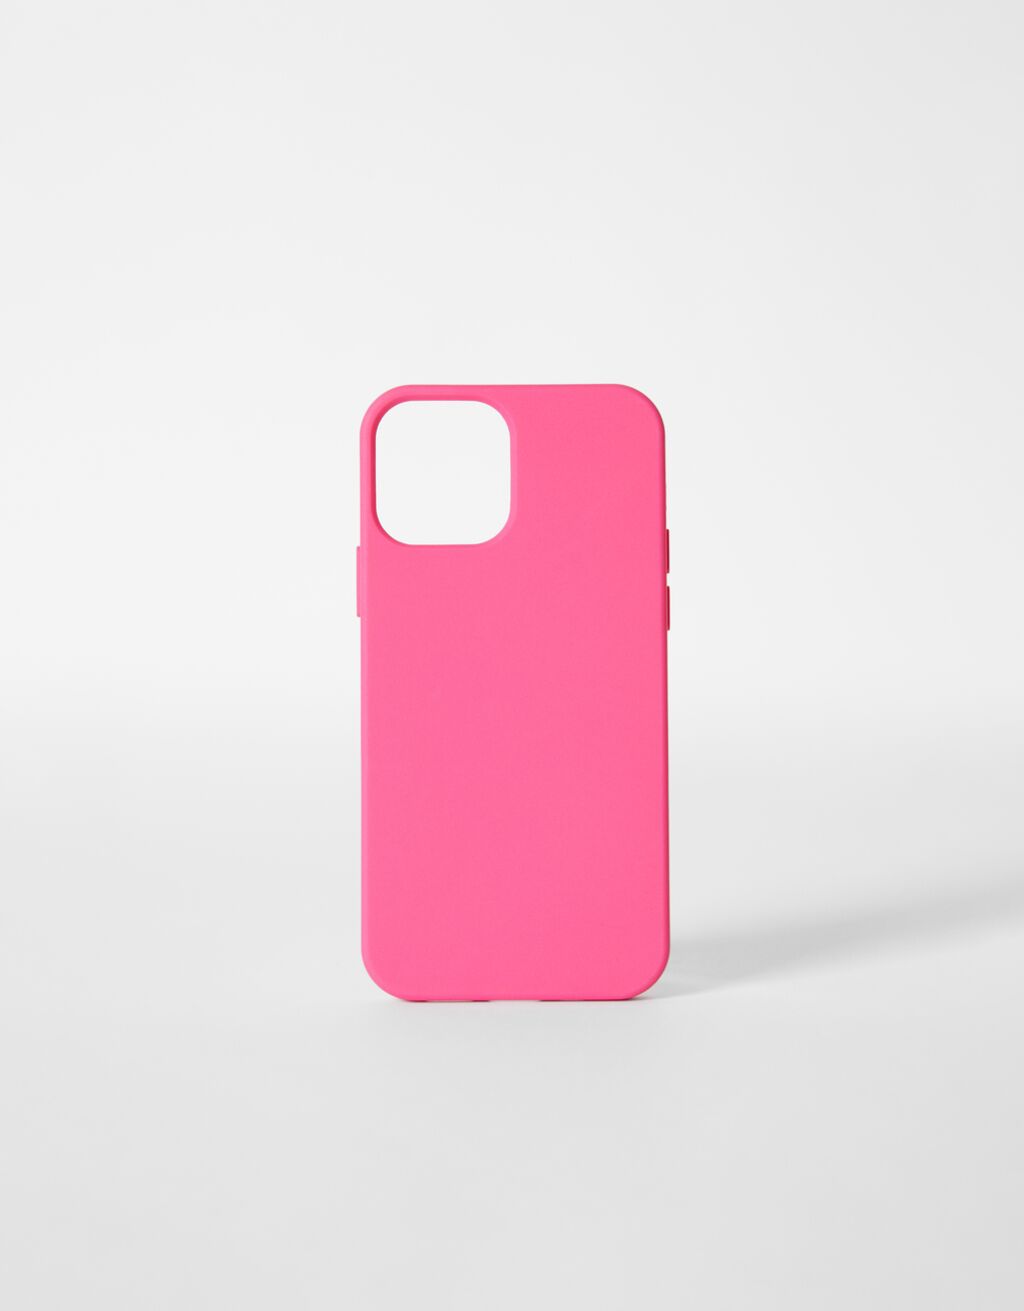 Coloured iPhone case